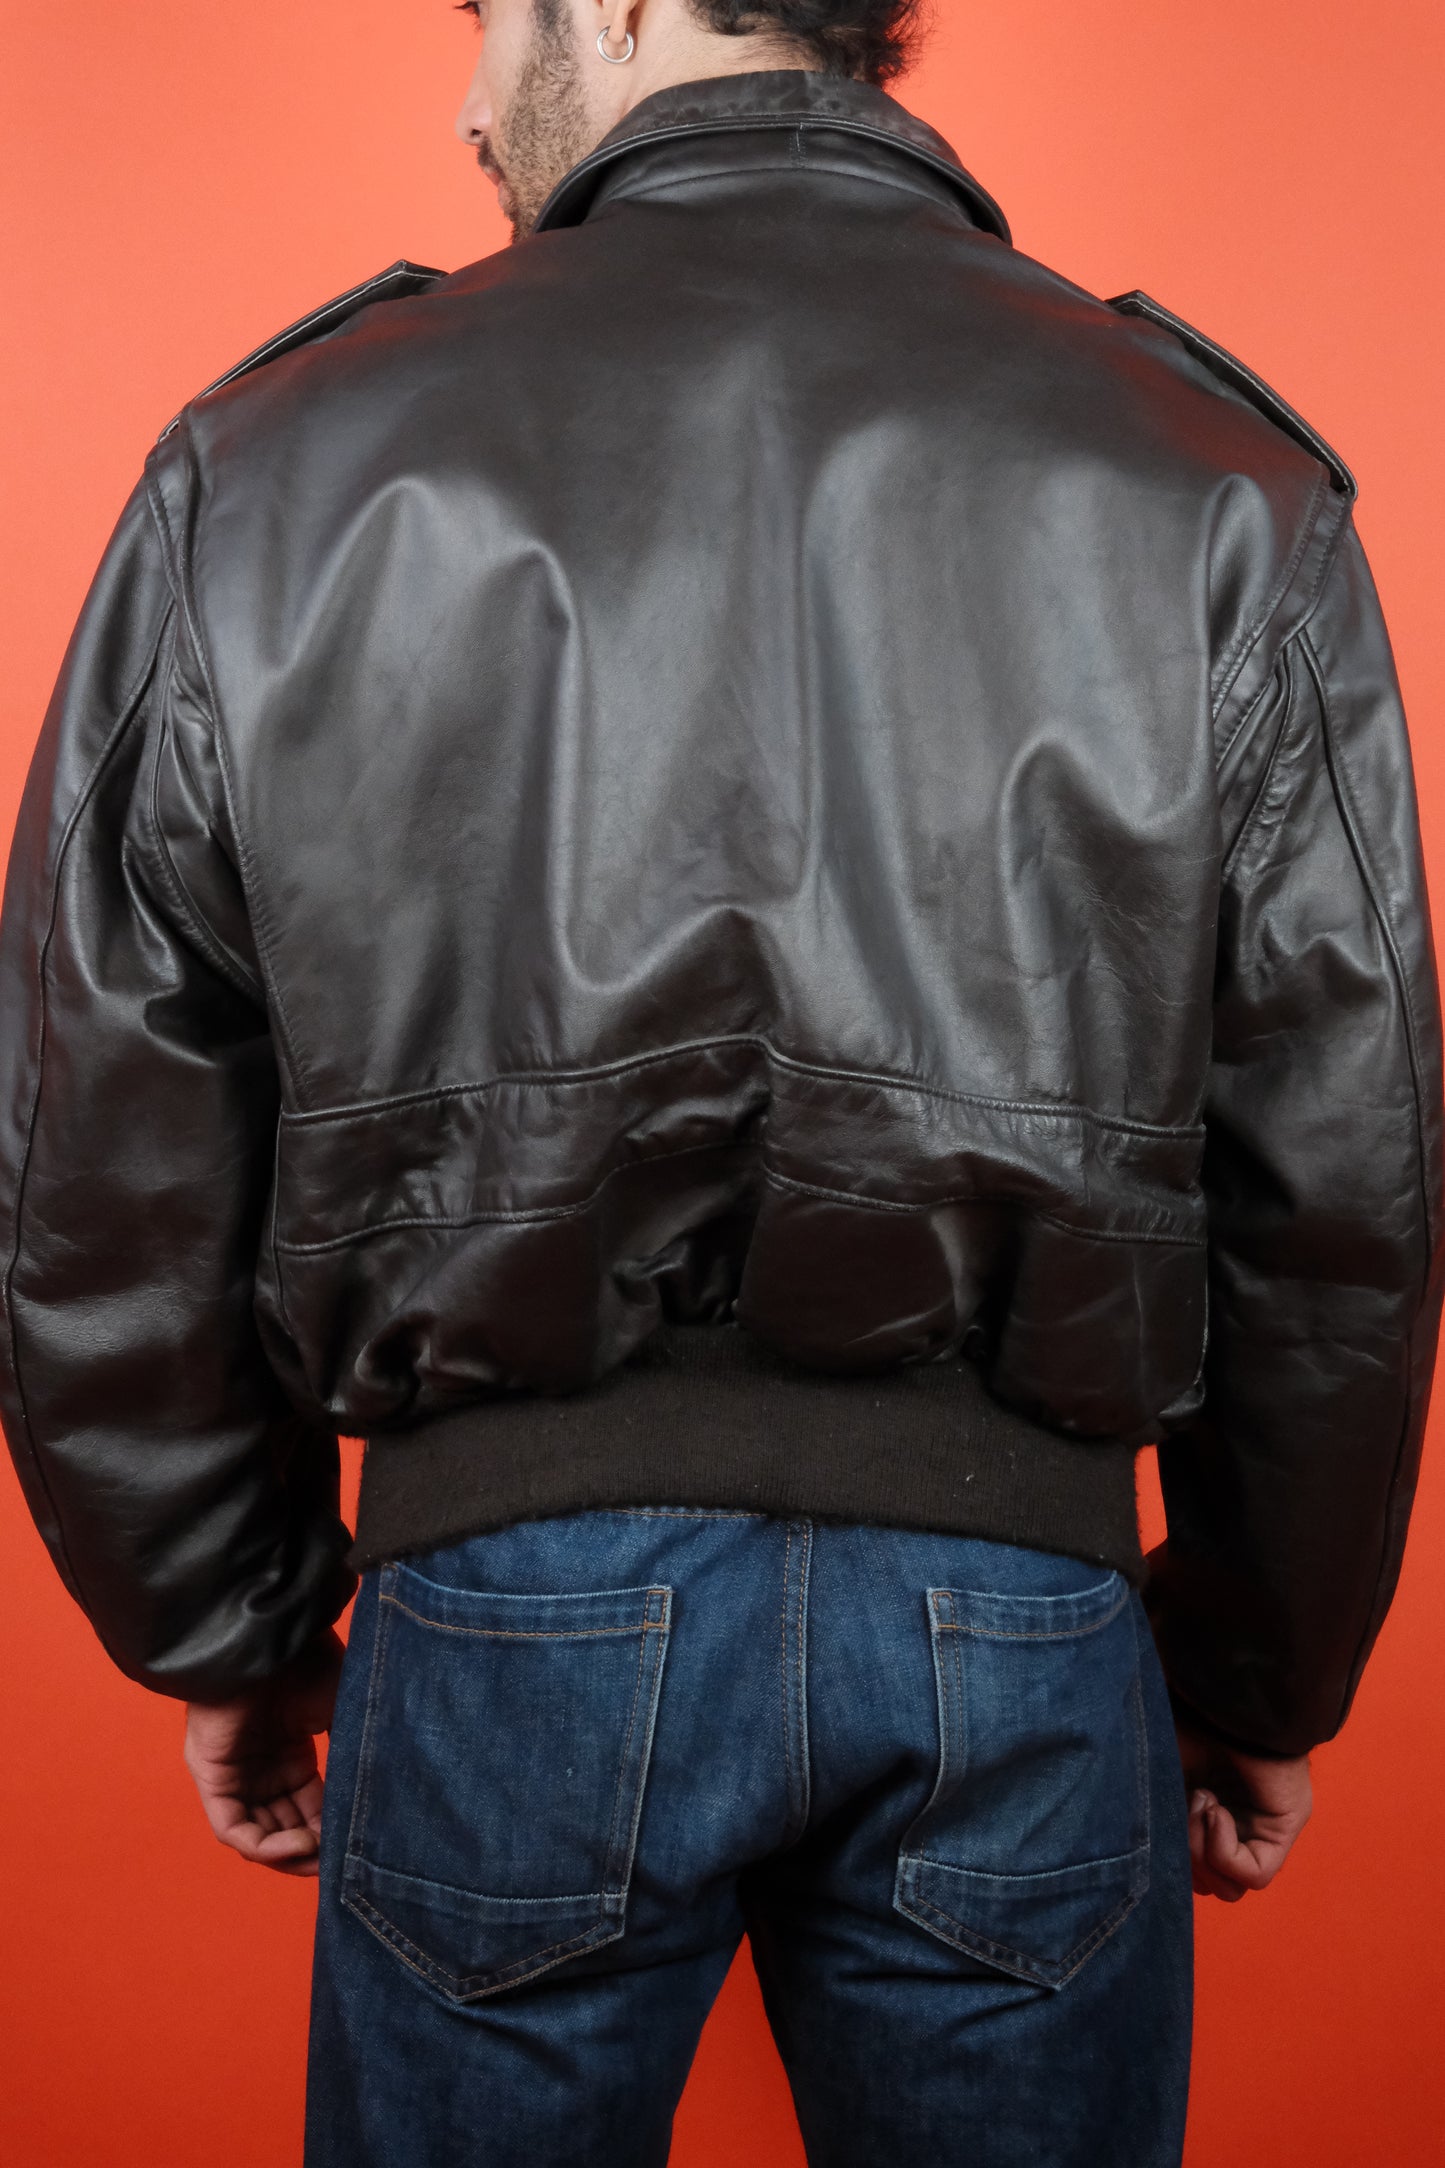 Schott Leather Jacket Type A-2 'XL/52' - vintage clothing clochard92.com